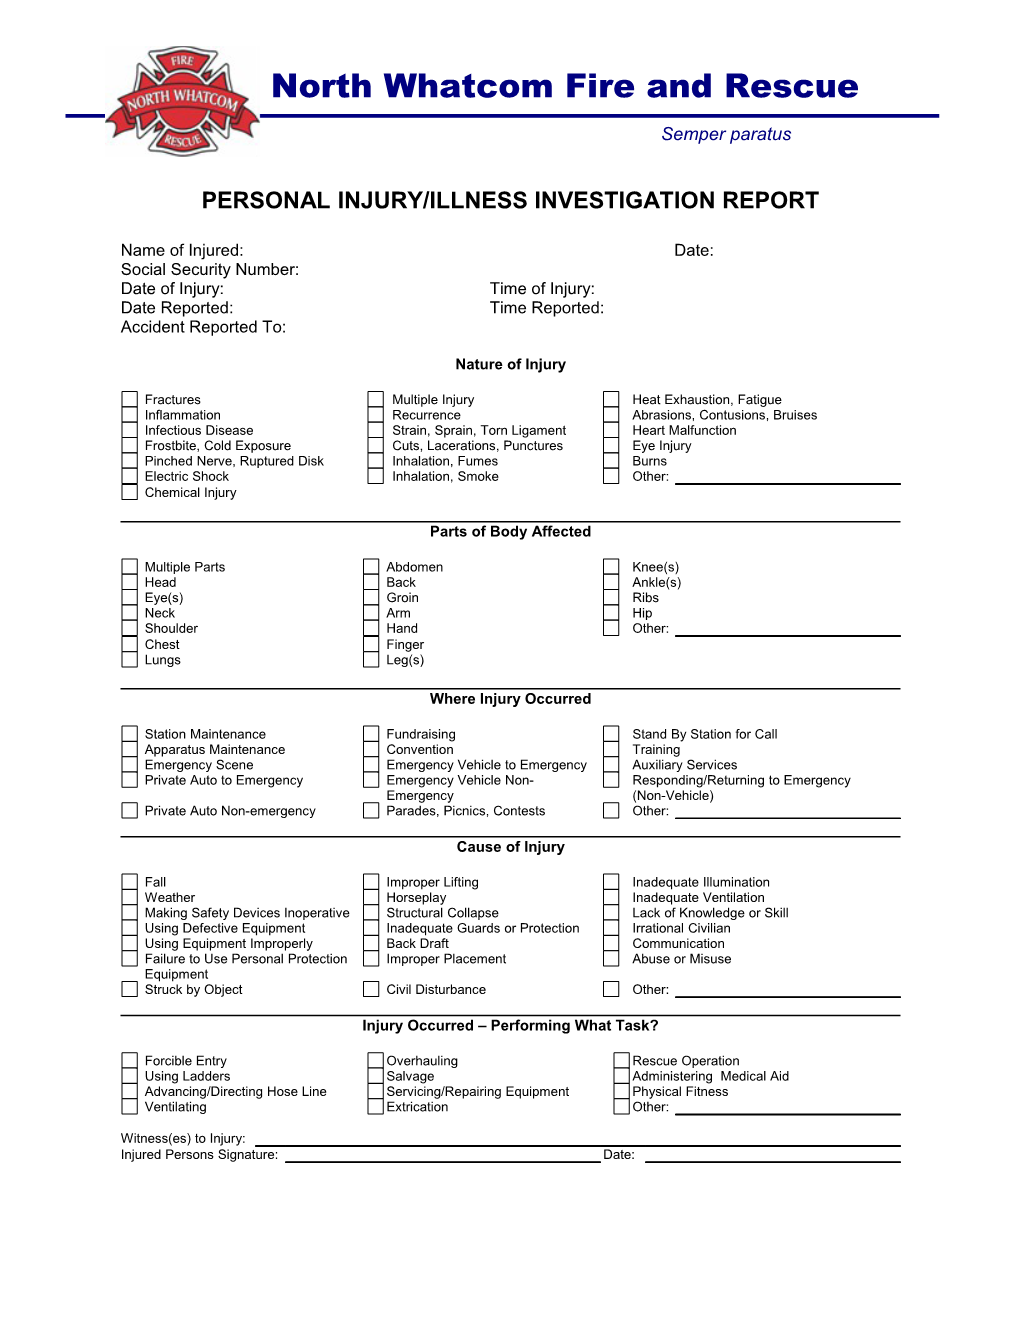 Personal Injury/Illness Investigation Report